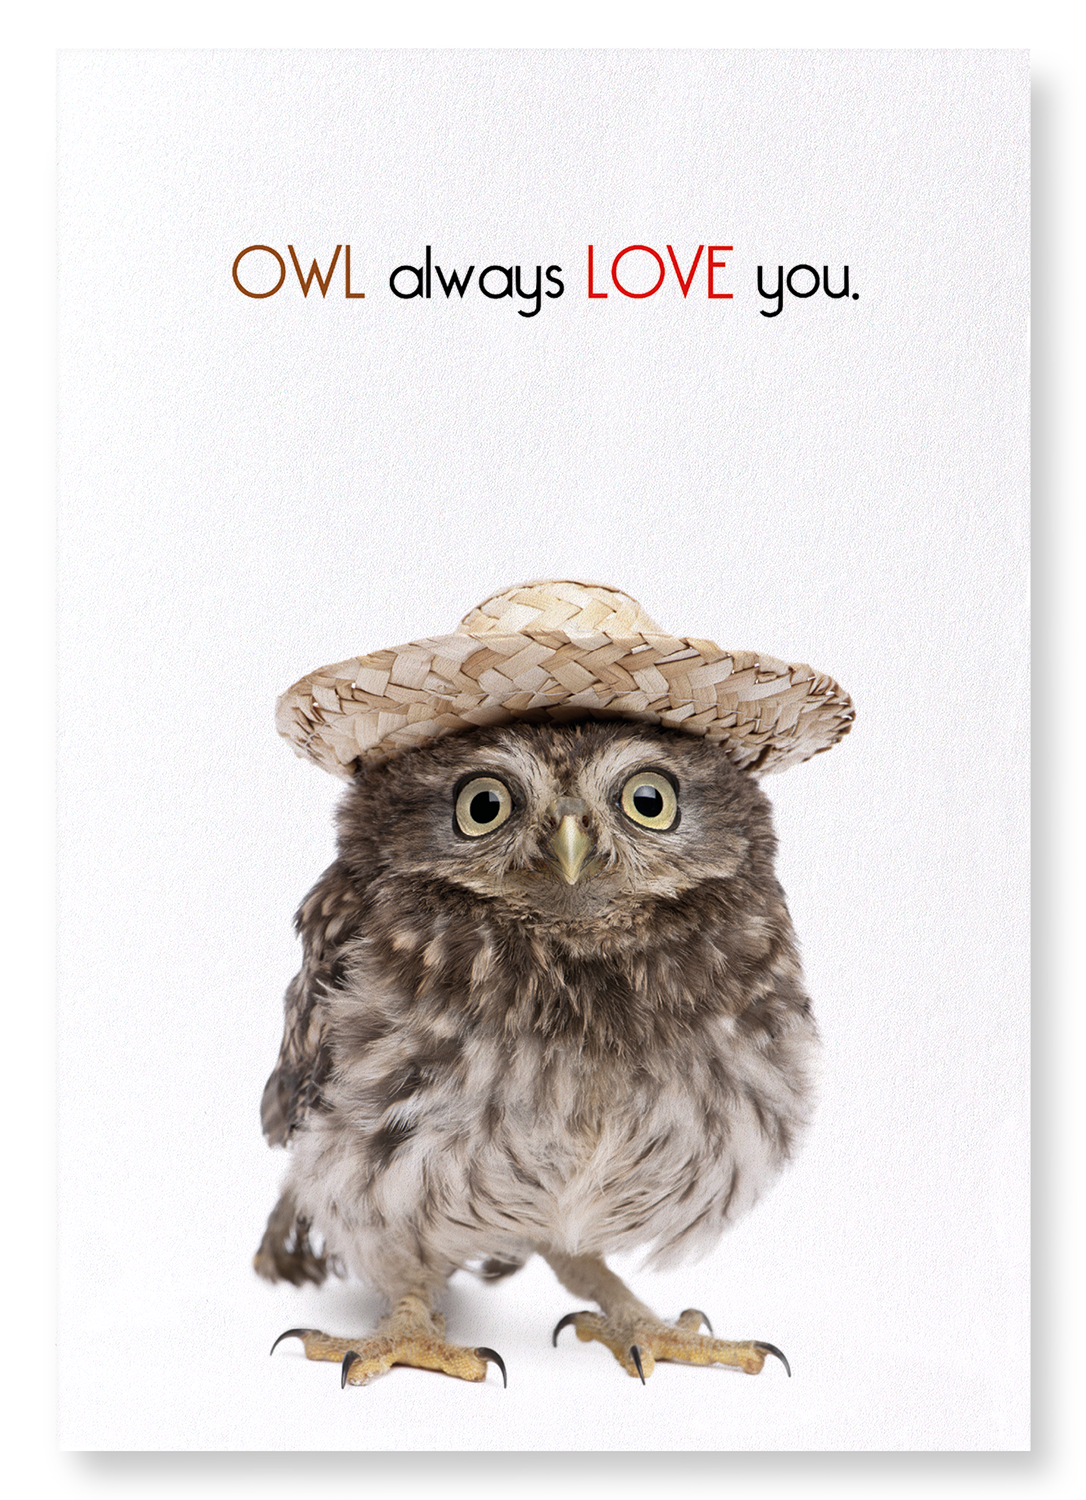 OWL ALWAYS LOVE YOU: Funny Animal Art print